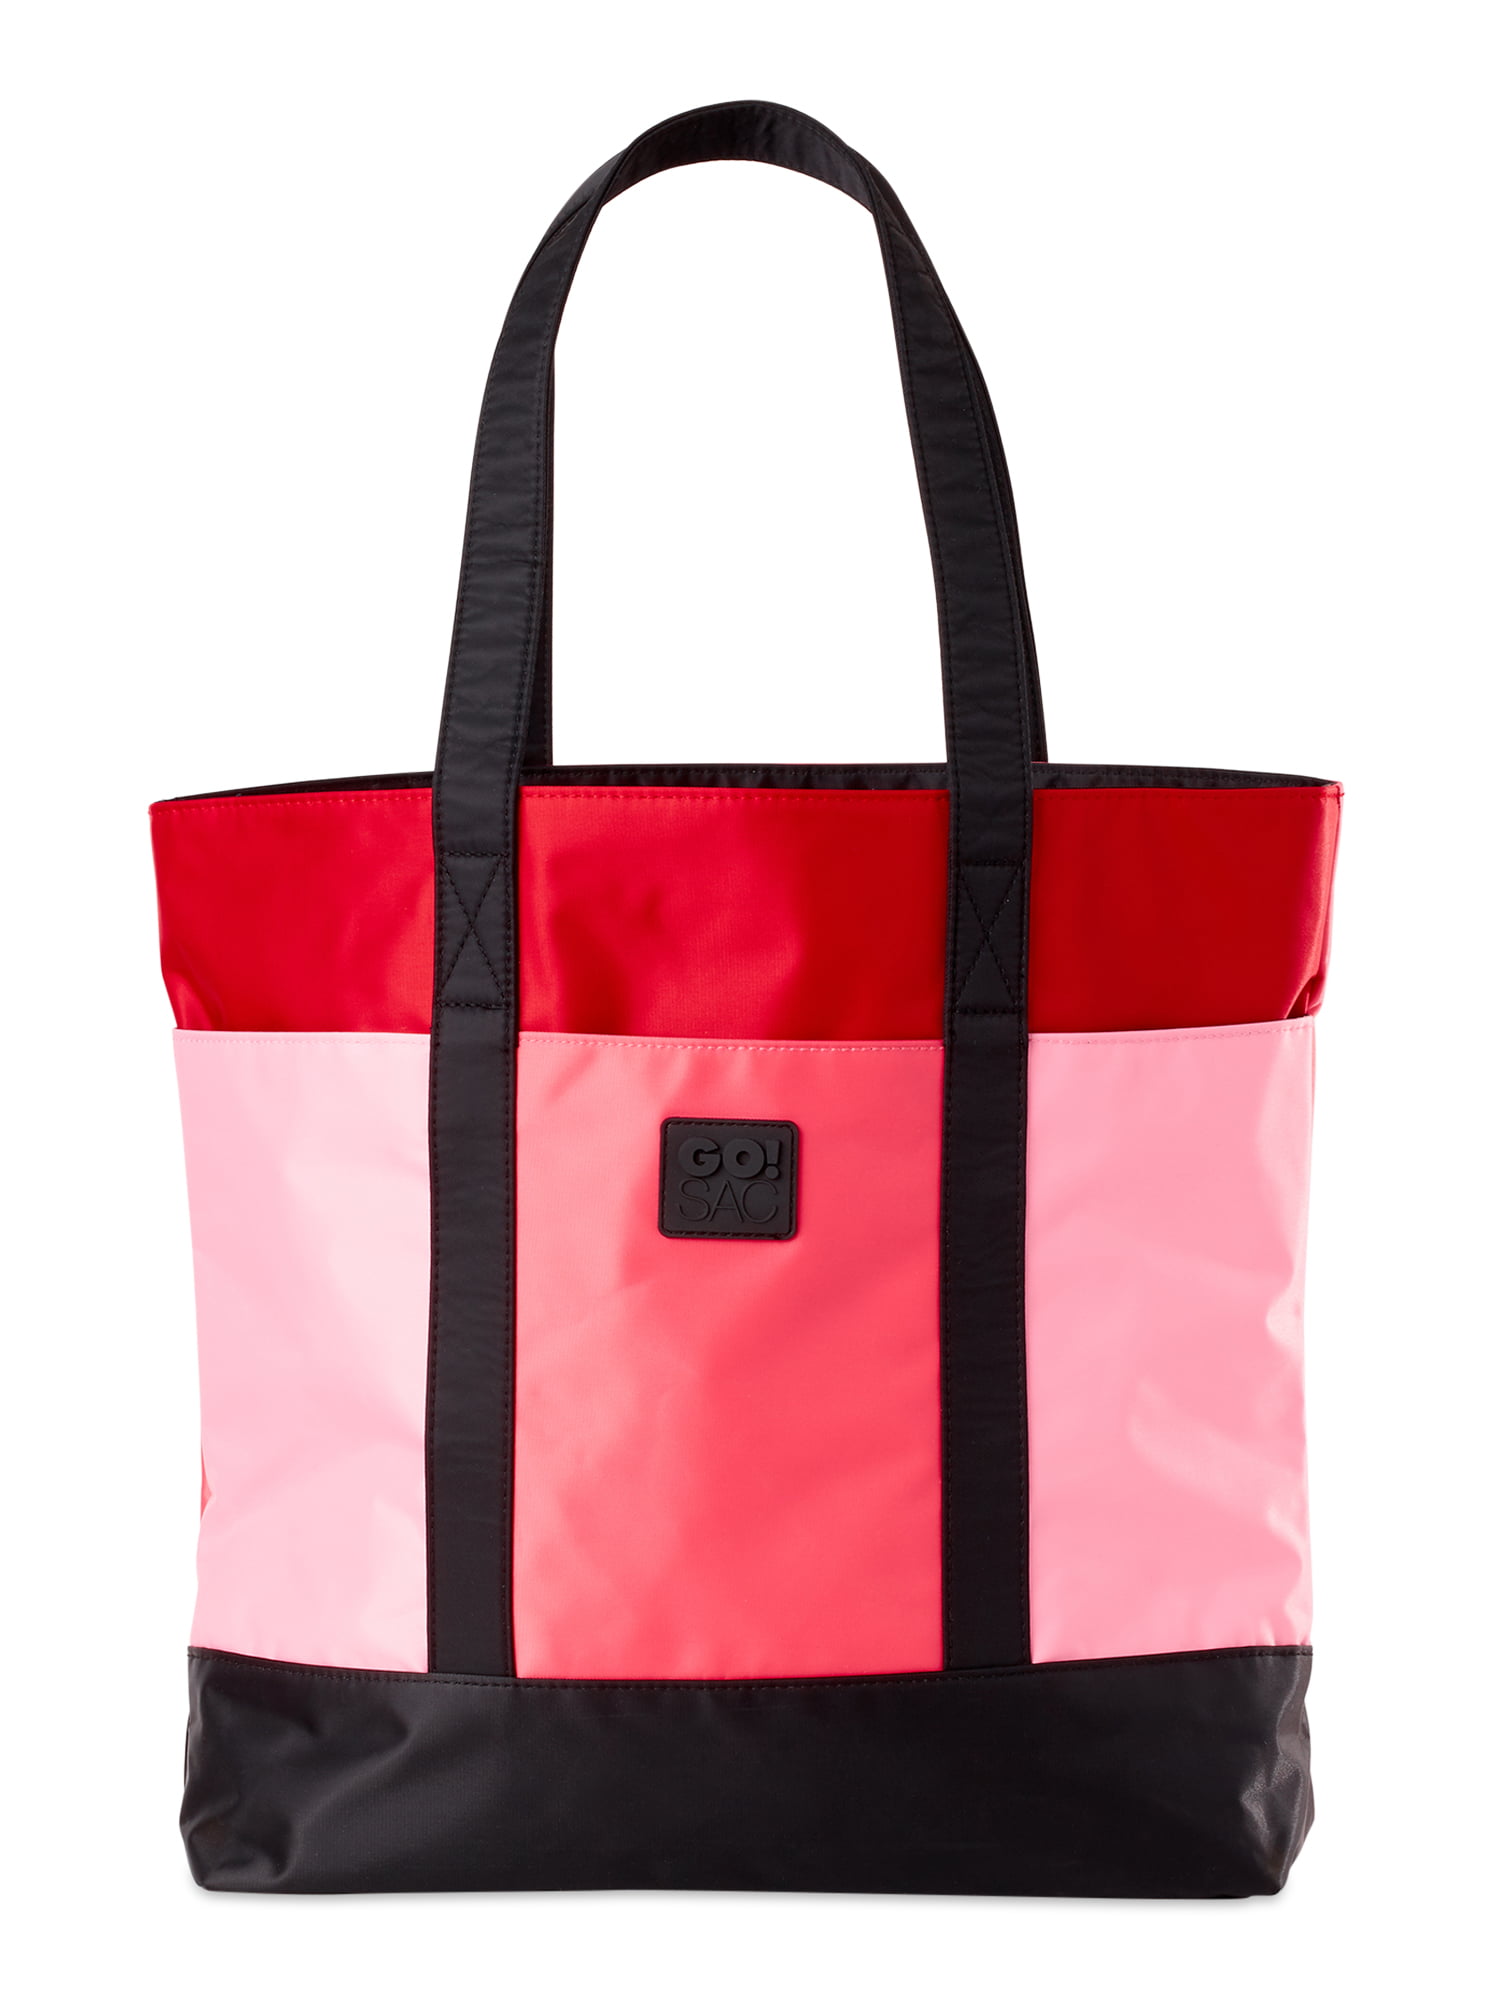 Go!Sac Women's Aida Color Block Tote Bag Pink Coral Red Black - Walmart.com